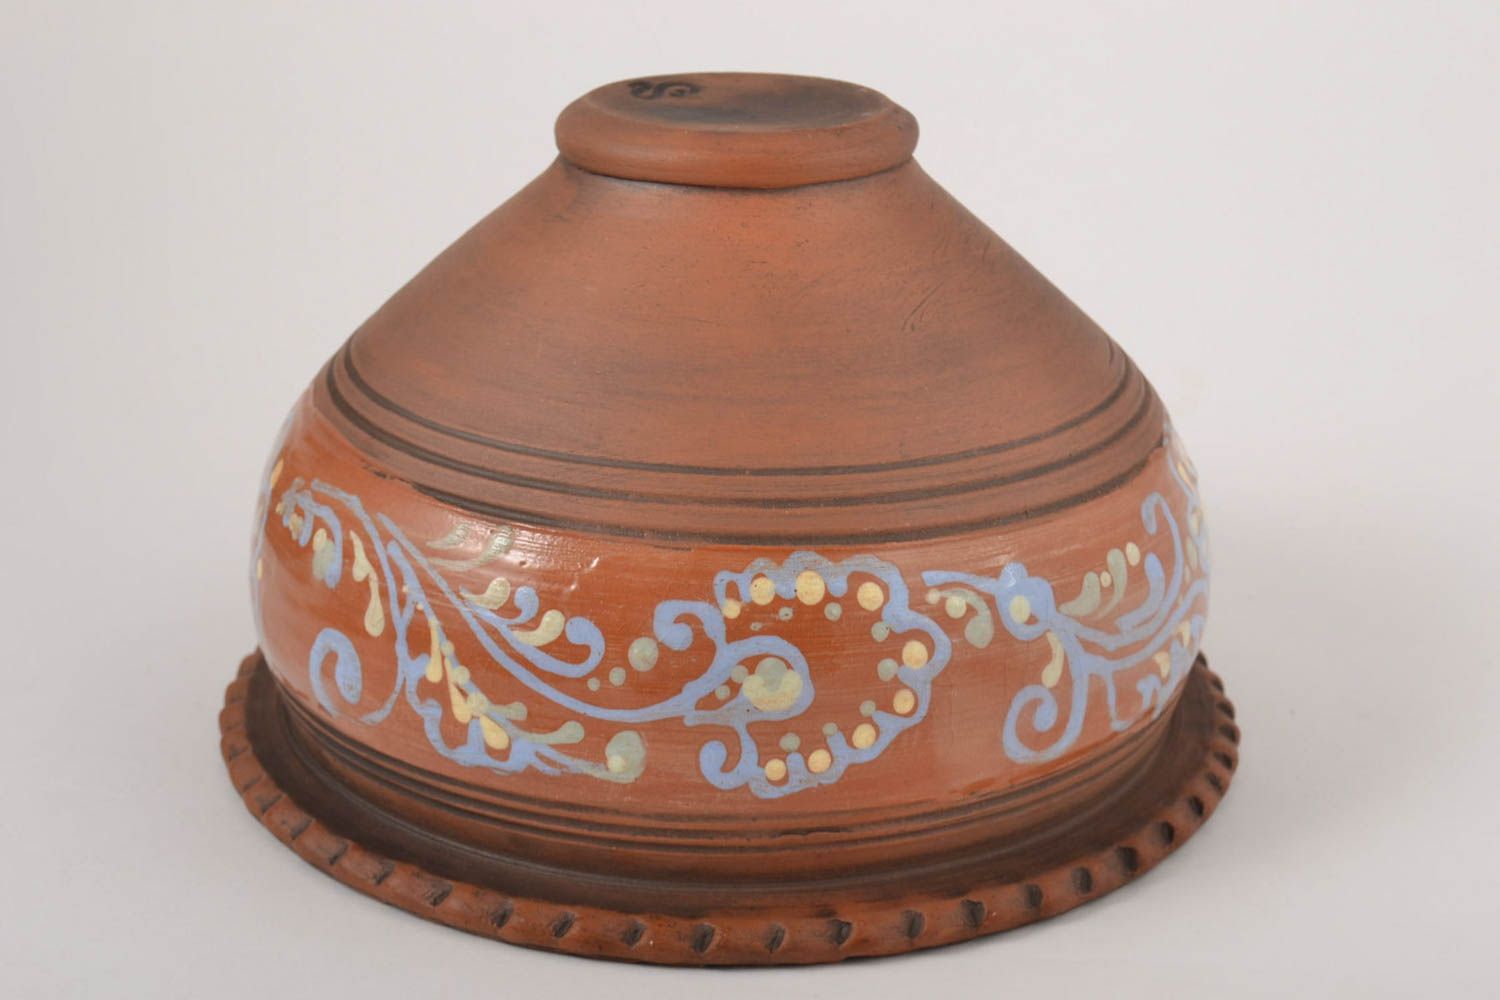 10 deep ceramic earth terracotta hand-painted glazed all-purpose bowl 2 lb photo 2